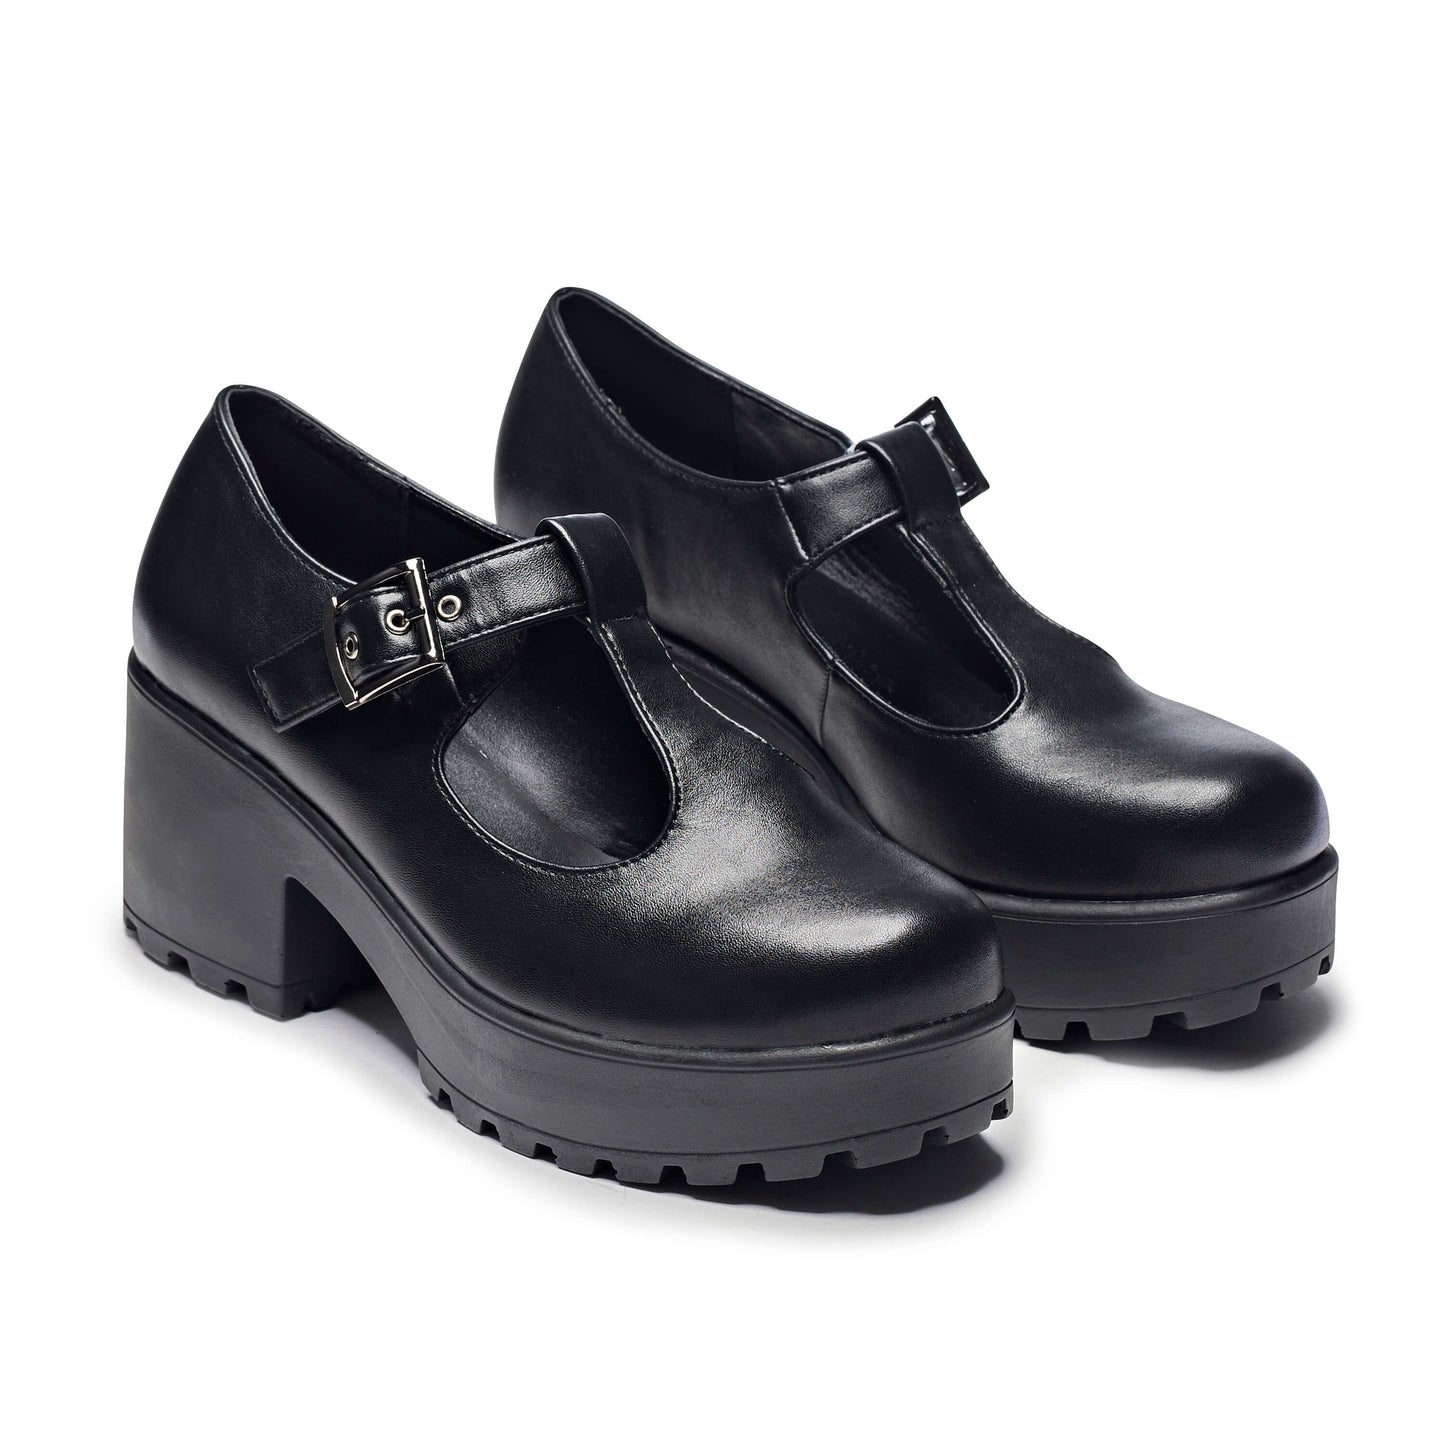 SAI Black Mary Jane Shoes 'Faux Leather Edition' - Mary Janes - KOI Footwear - Black - Three-Quarter View